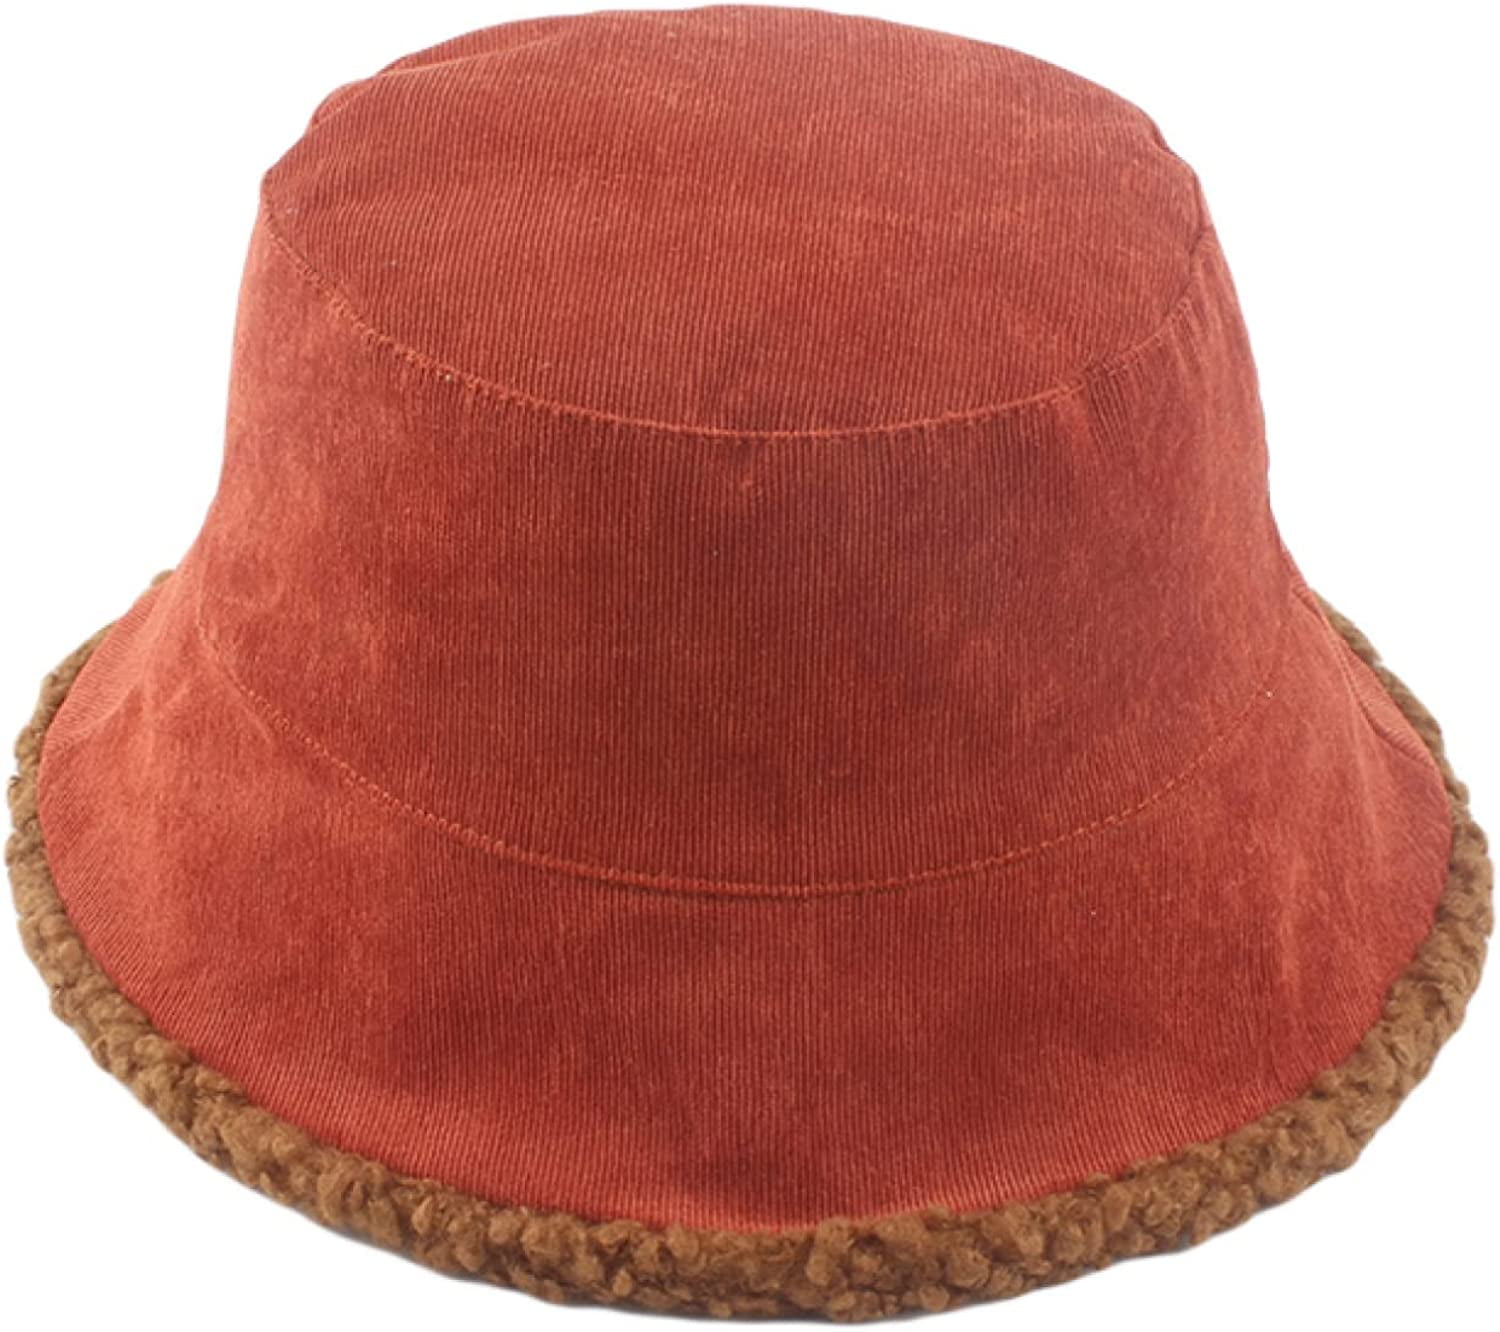 Bundle of 2 Black & Brown Corduroy Bucket Hats